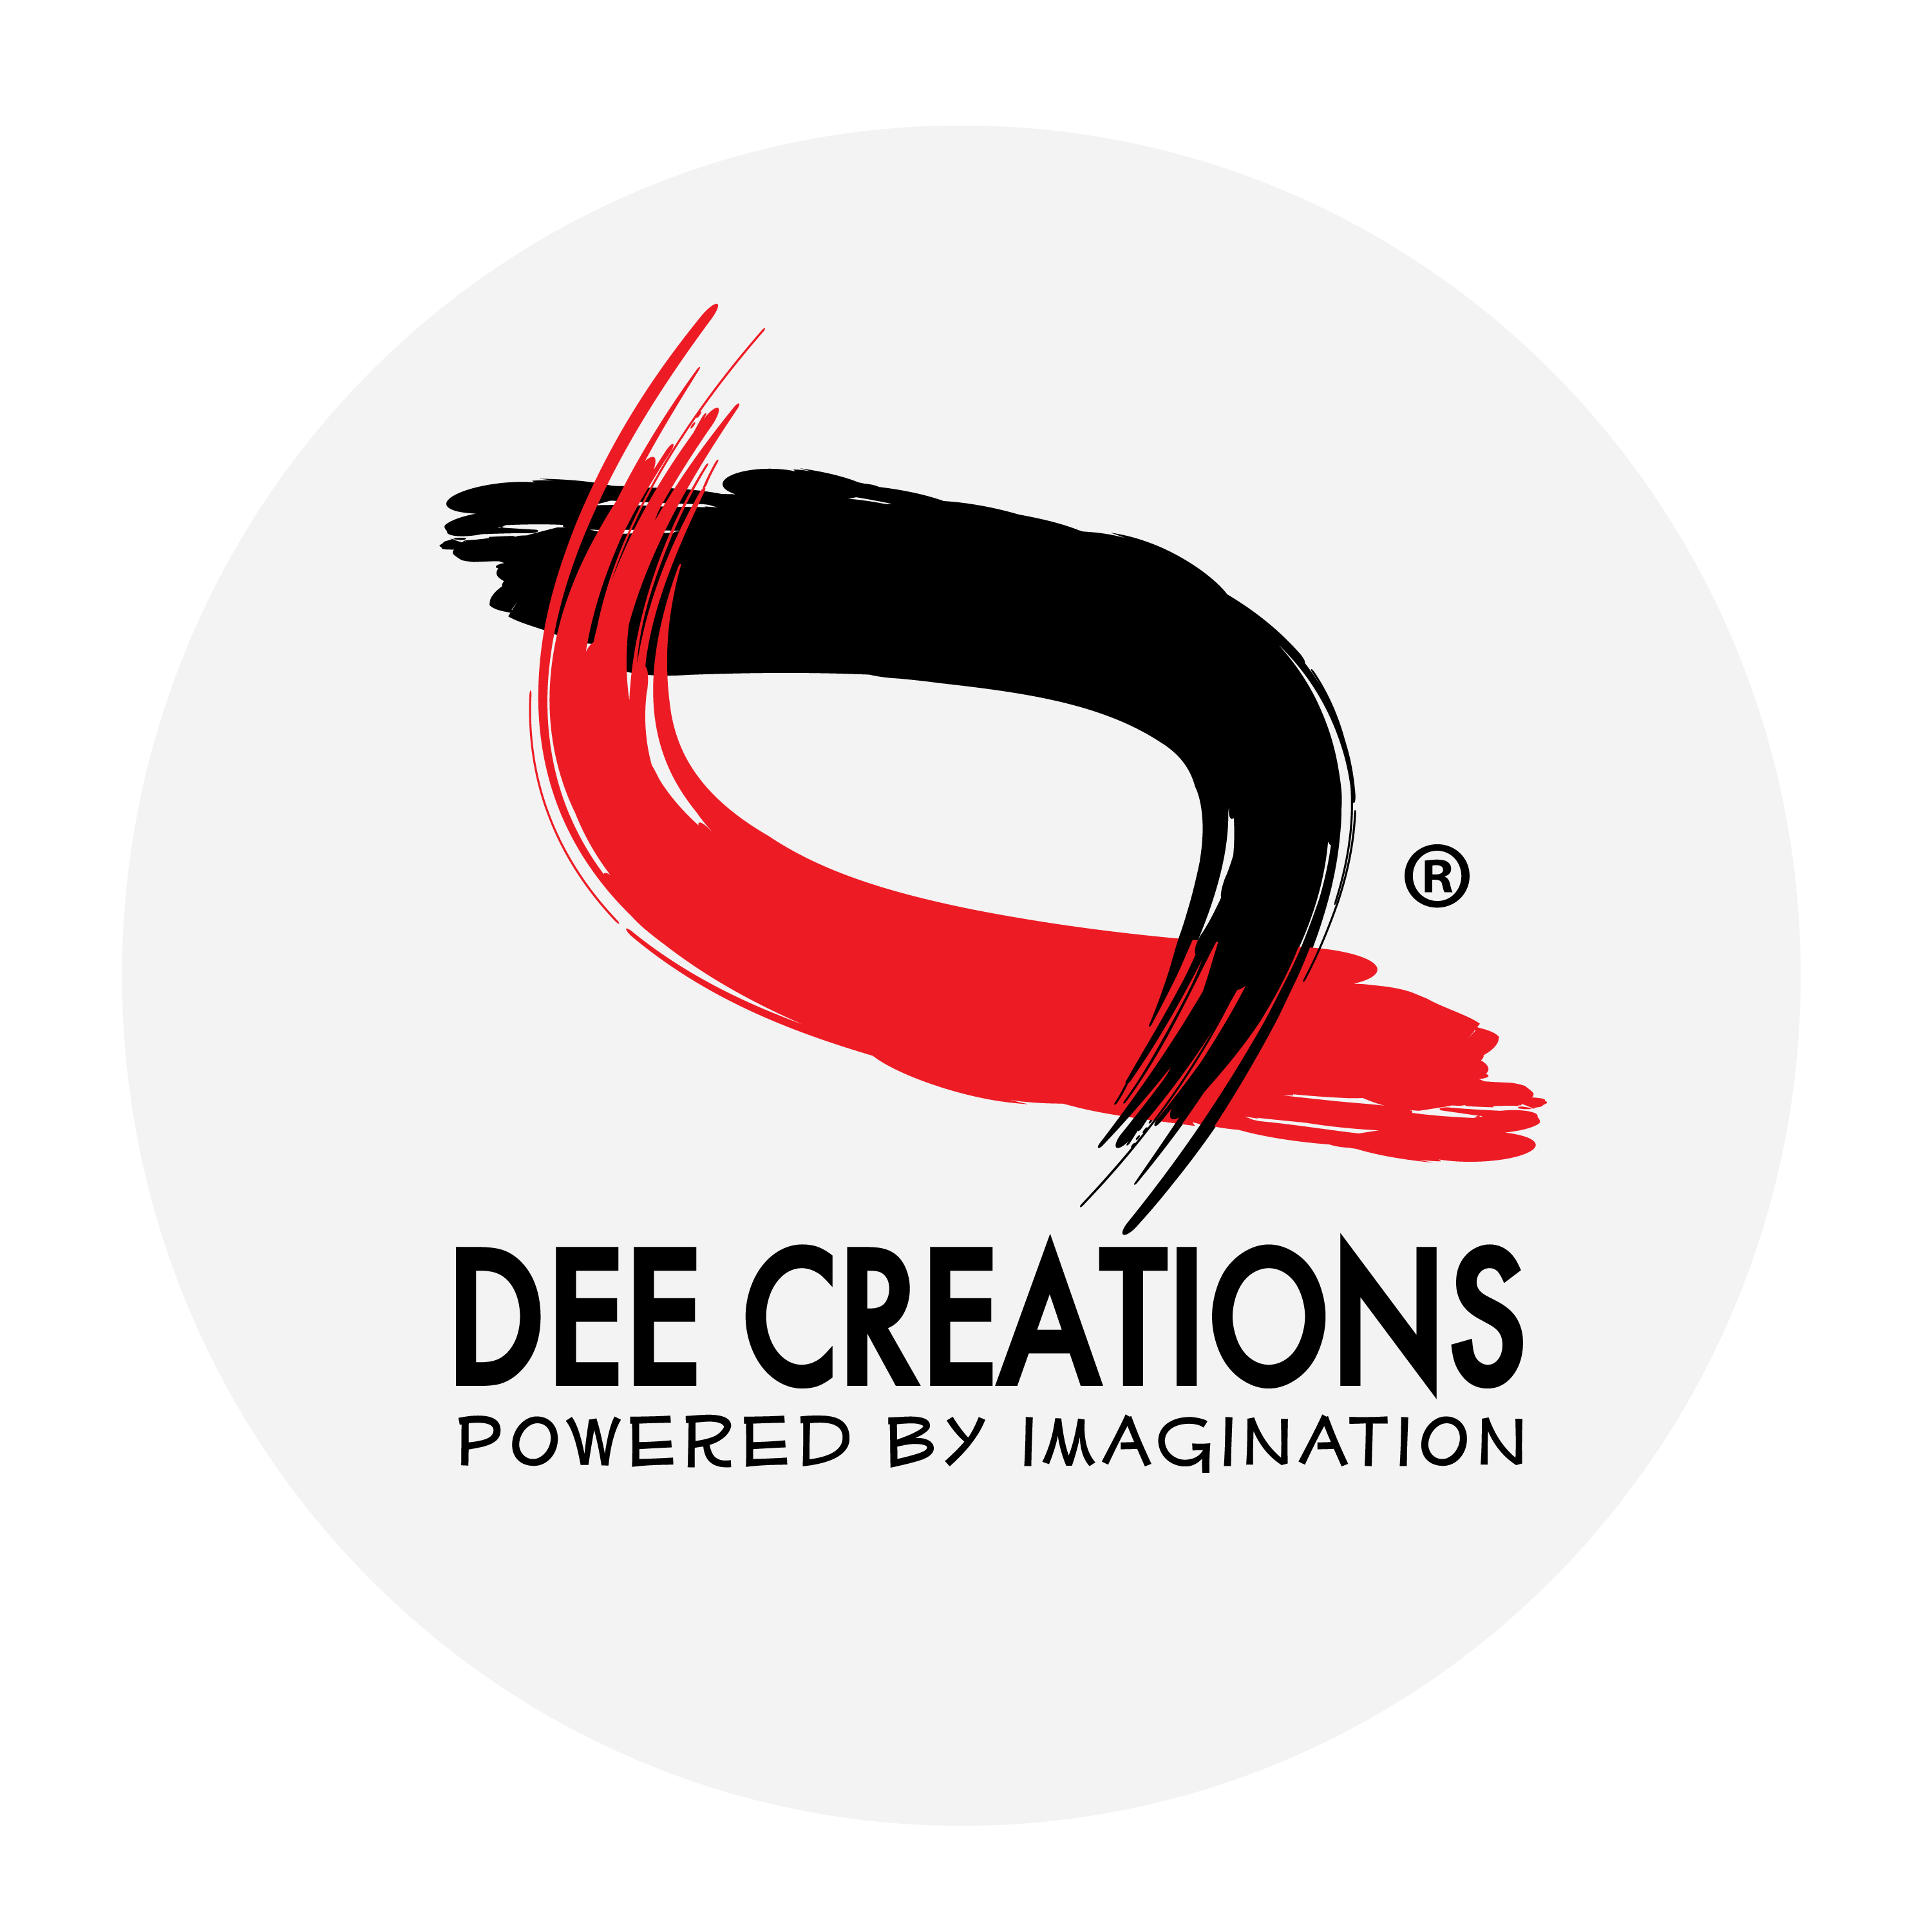 Dee Creations